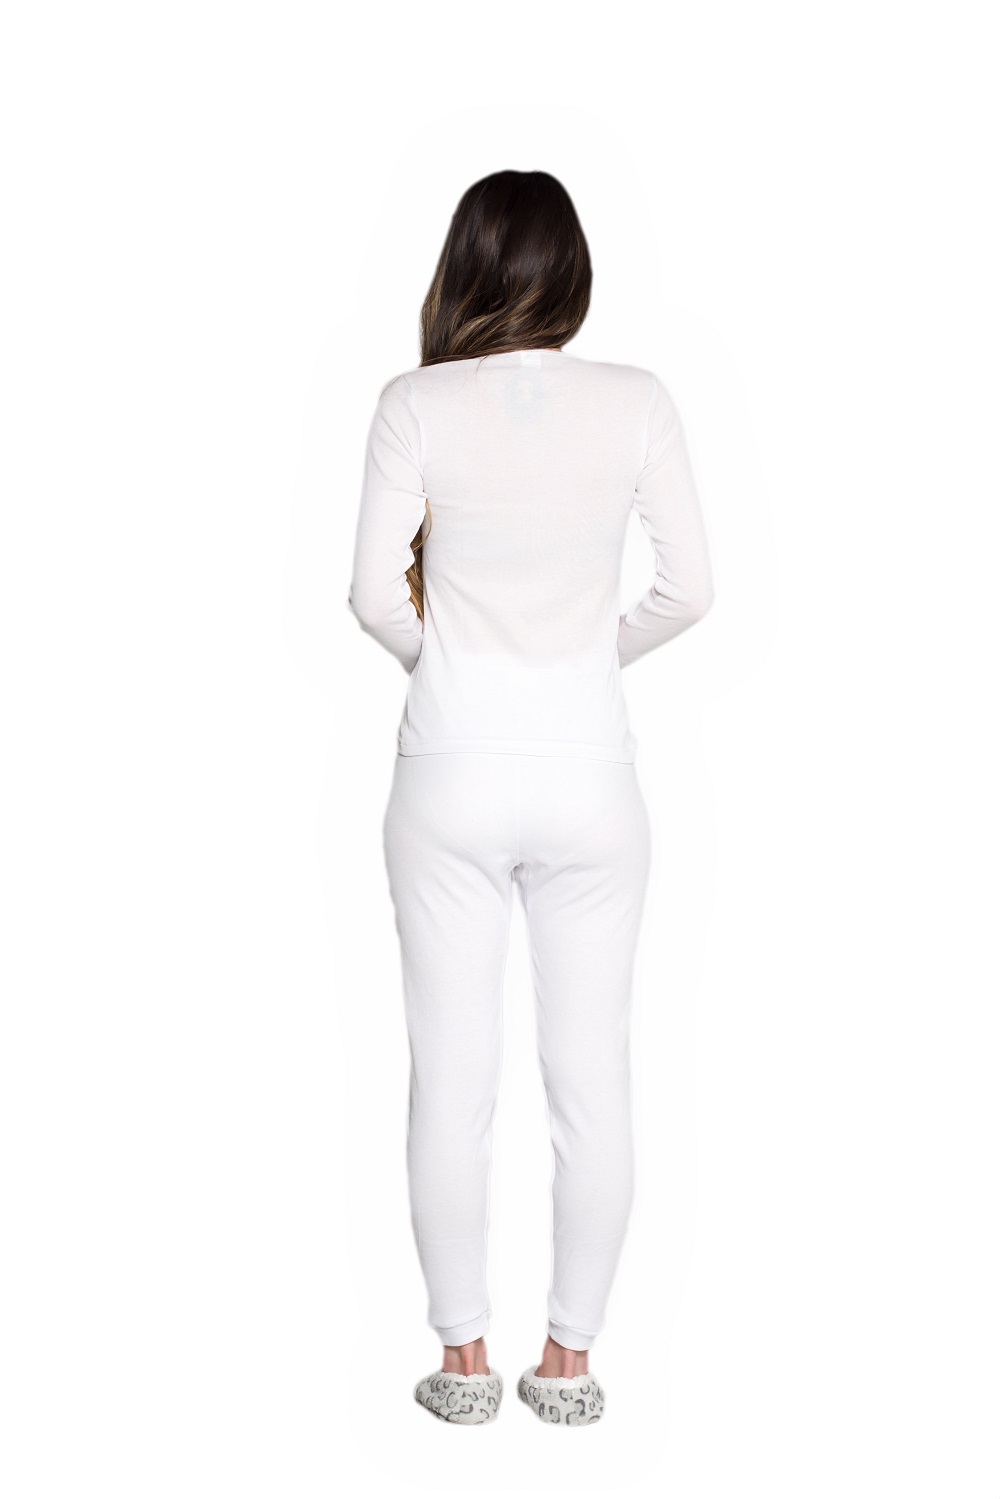 2 Pack Ladies Cotton Blend Thermal Underwear Long Johns Pants White